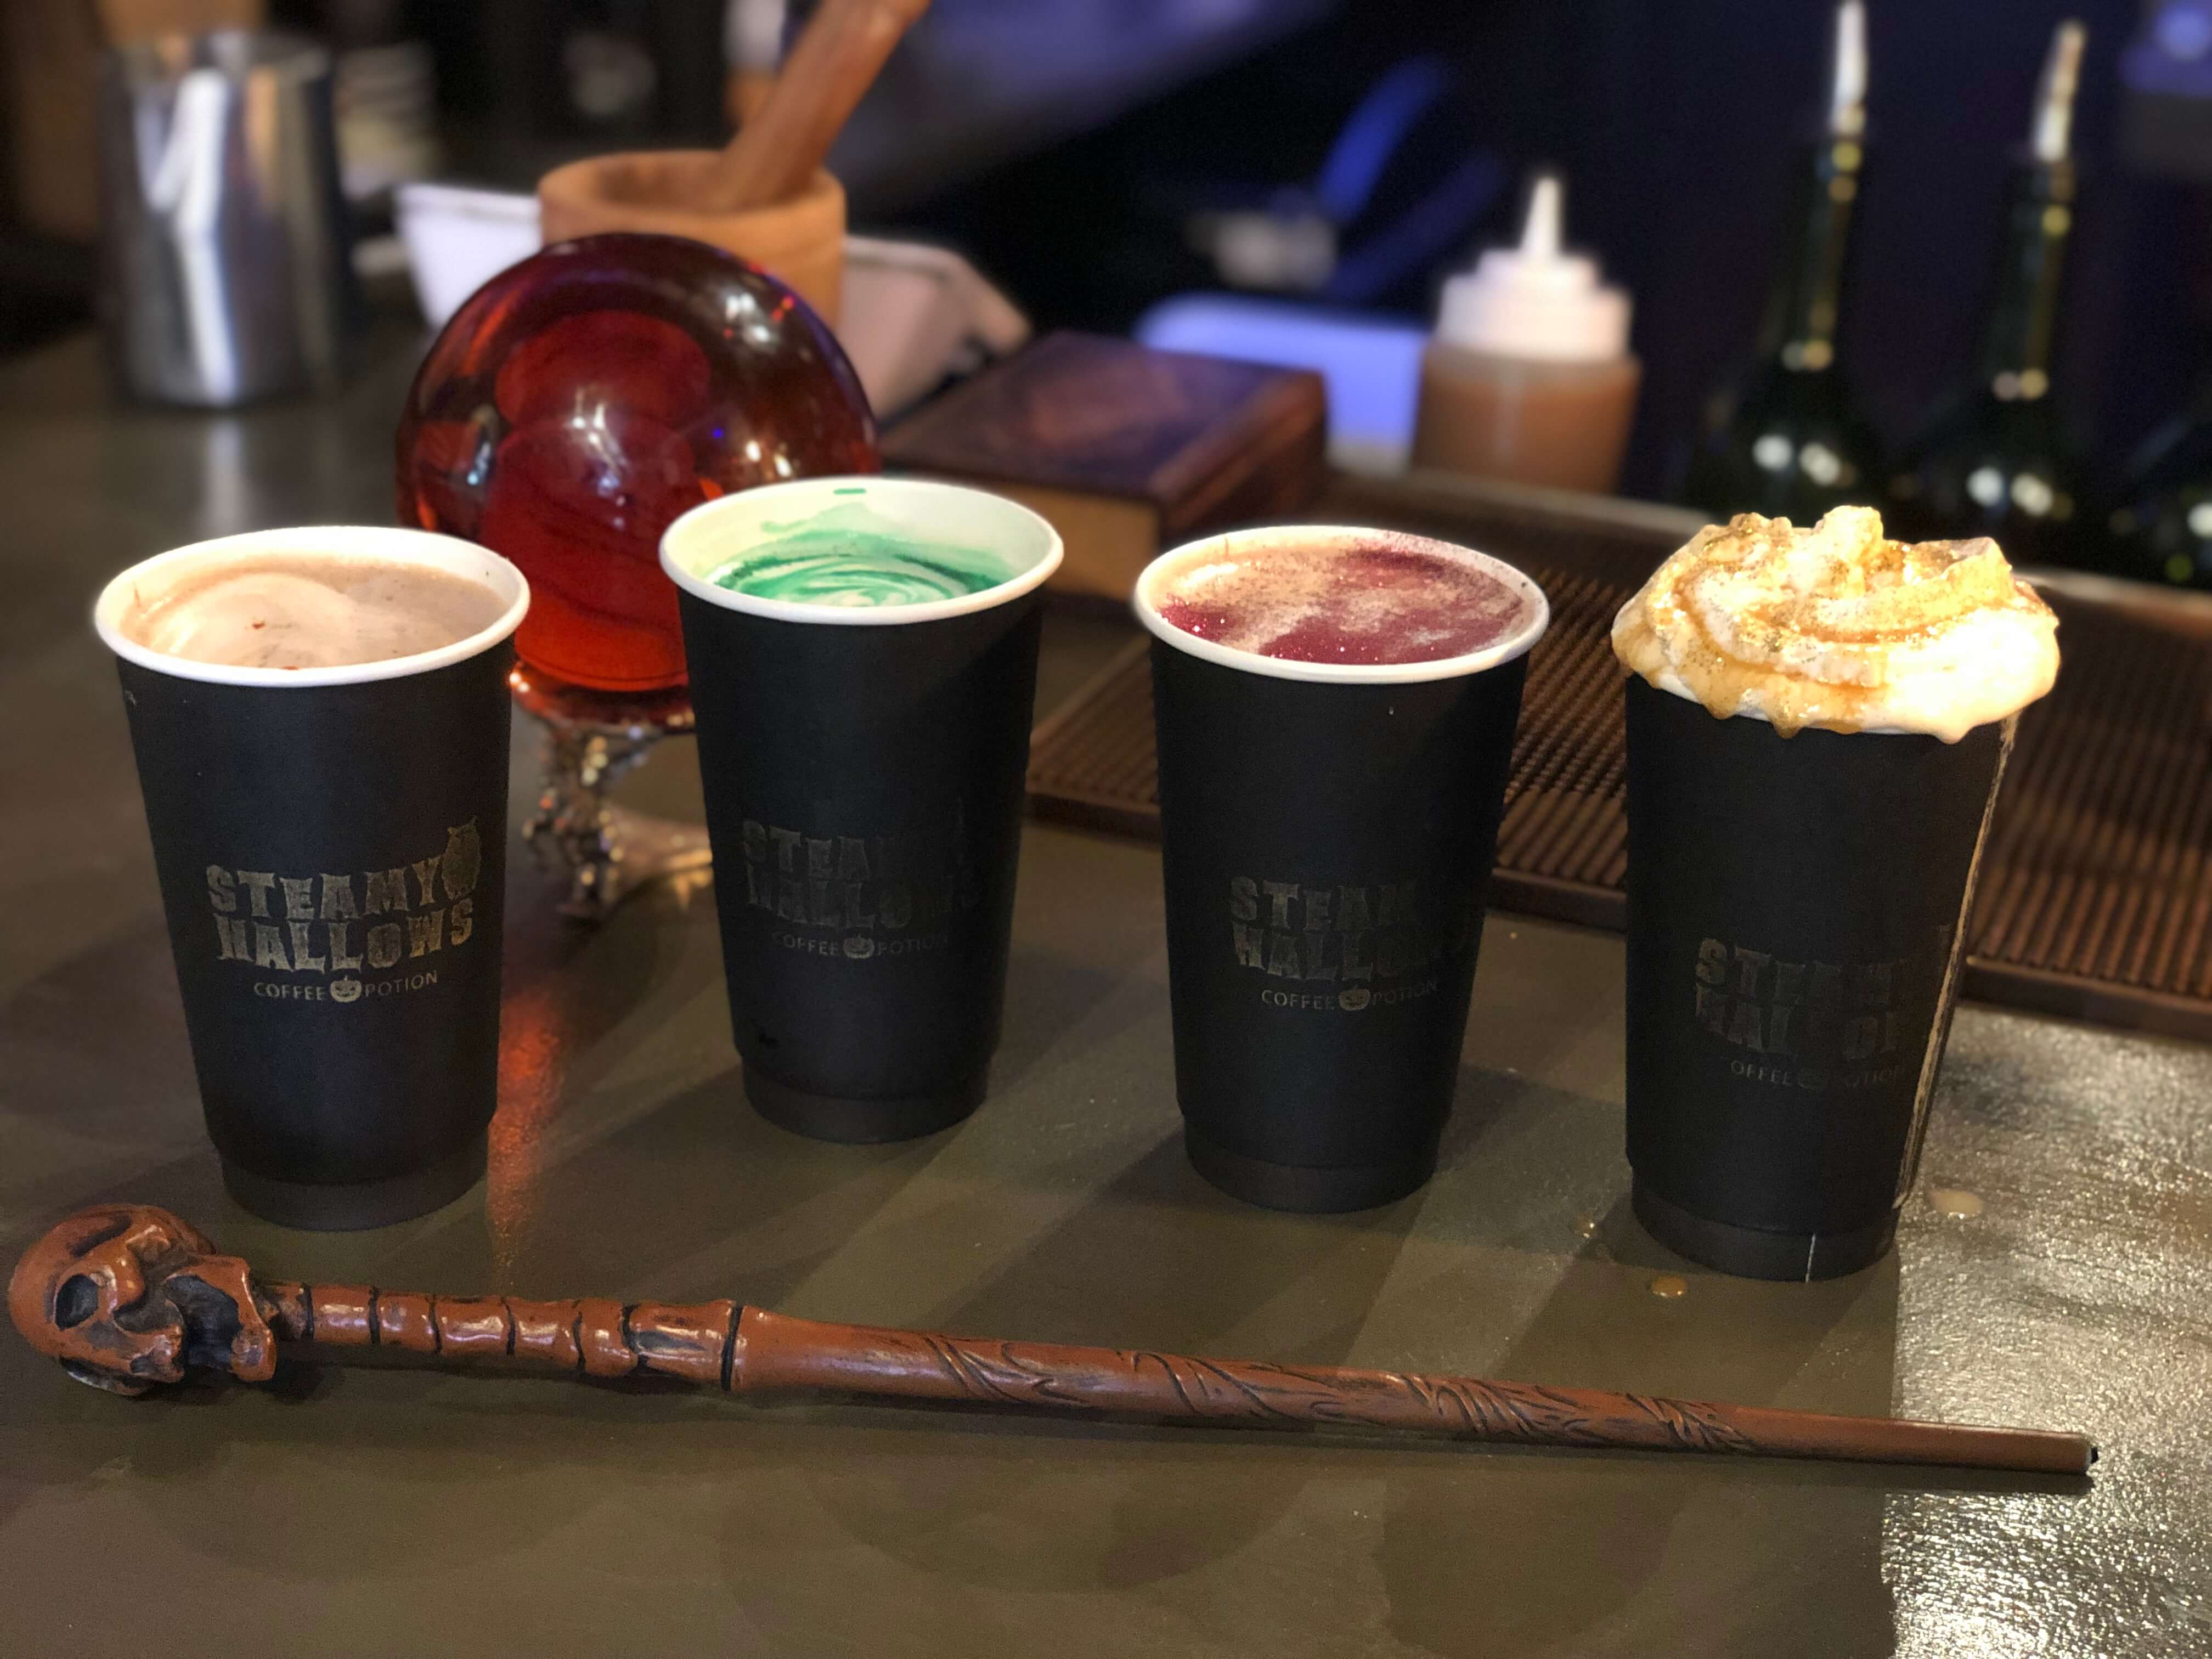 Harry Potter-themed drinks